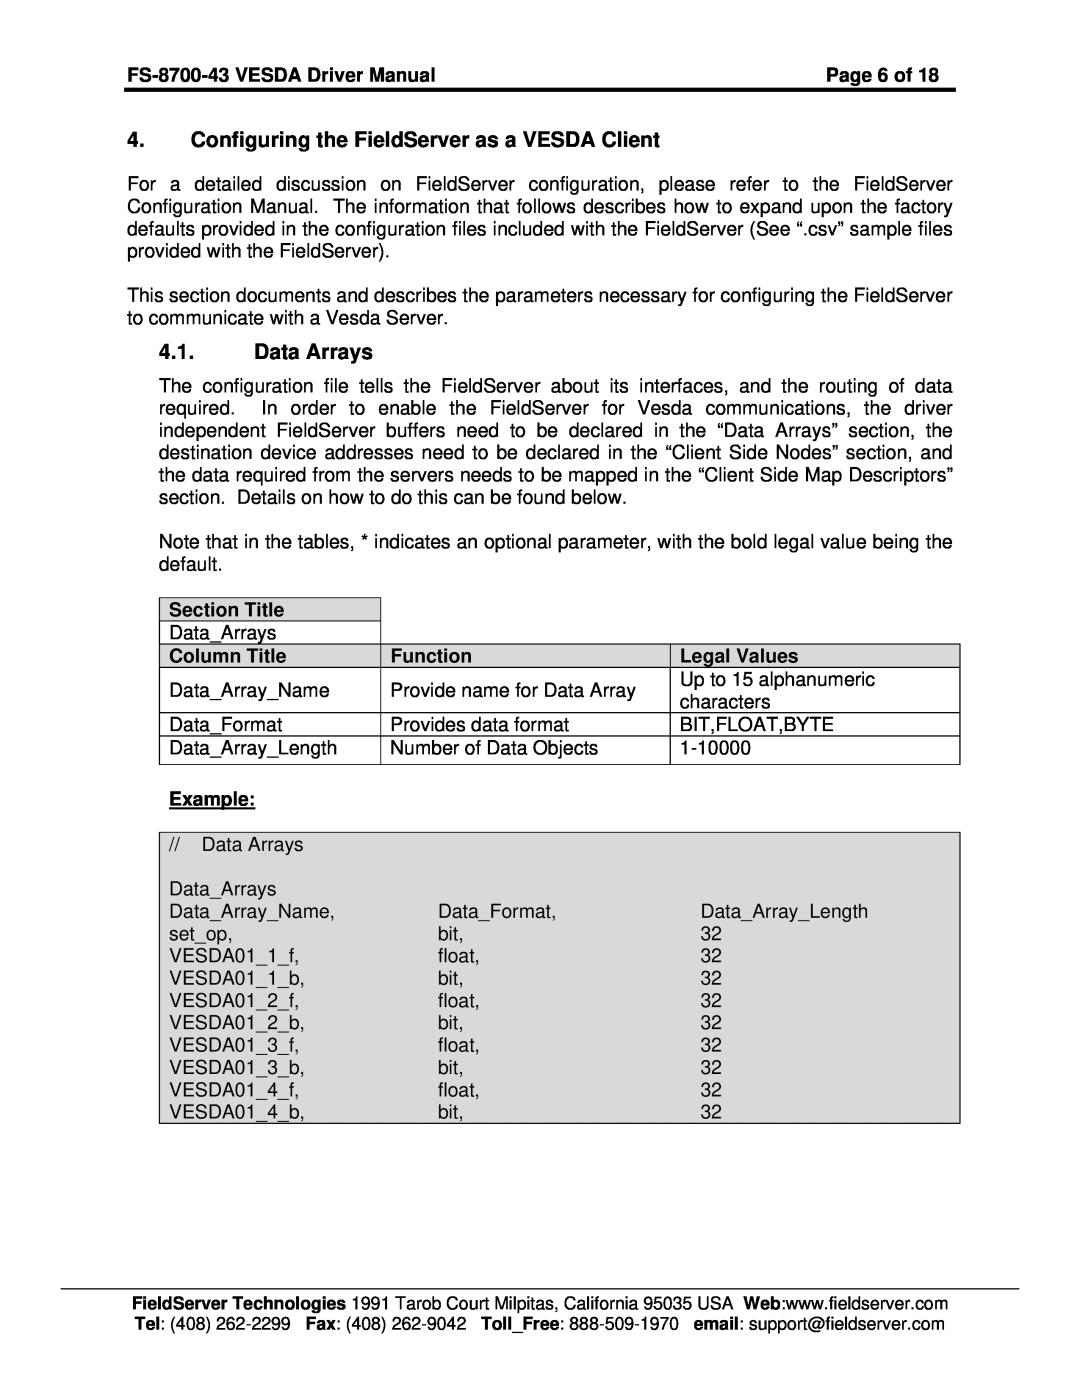 FieldServer Configuring the FieldServer as a VESDA Client, Data Arrays, FS-8700-43 VESDA Driver Manual, Page 6 of 